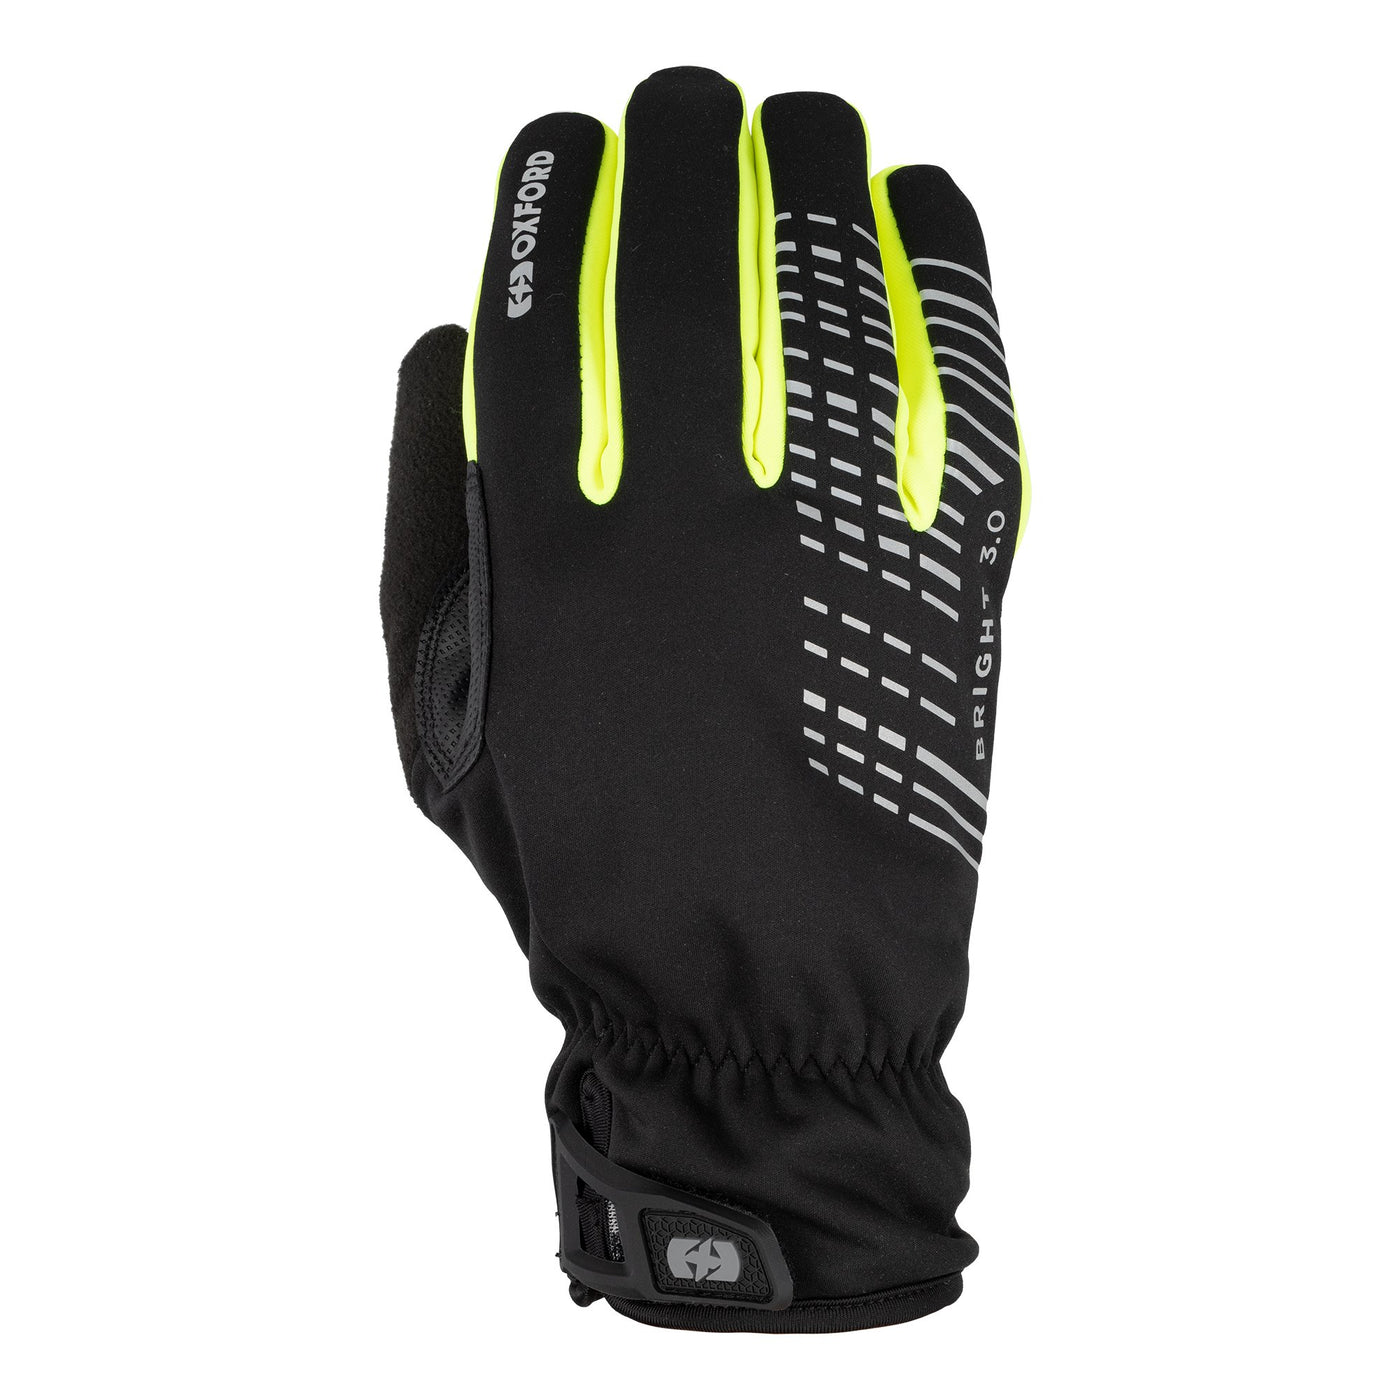 Oxford Bright Gloves 3.0